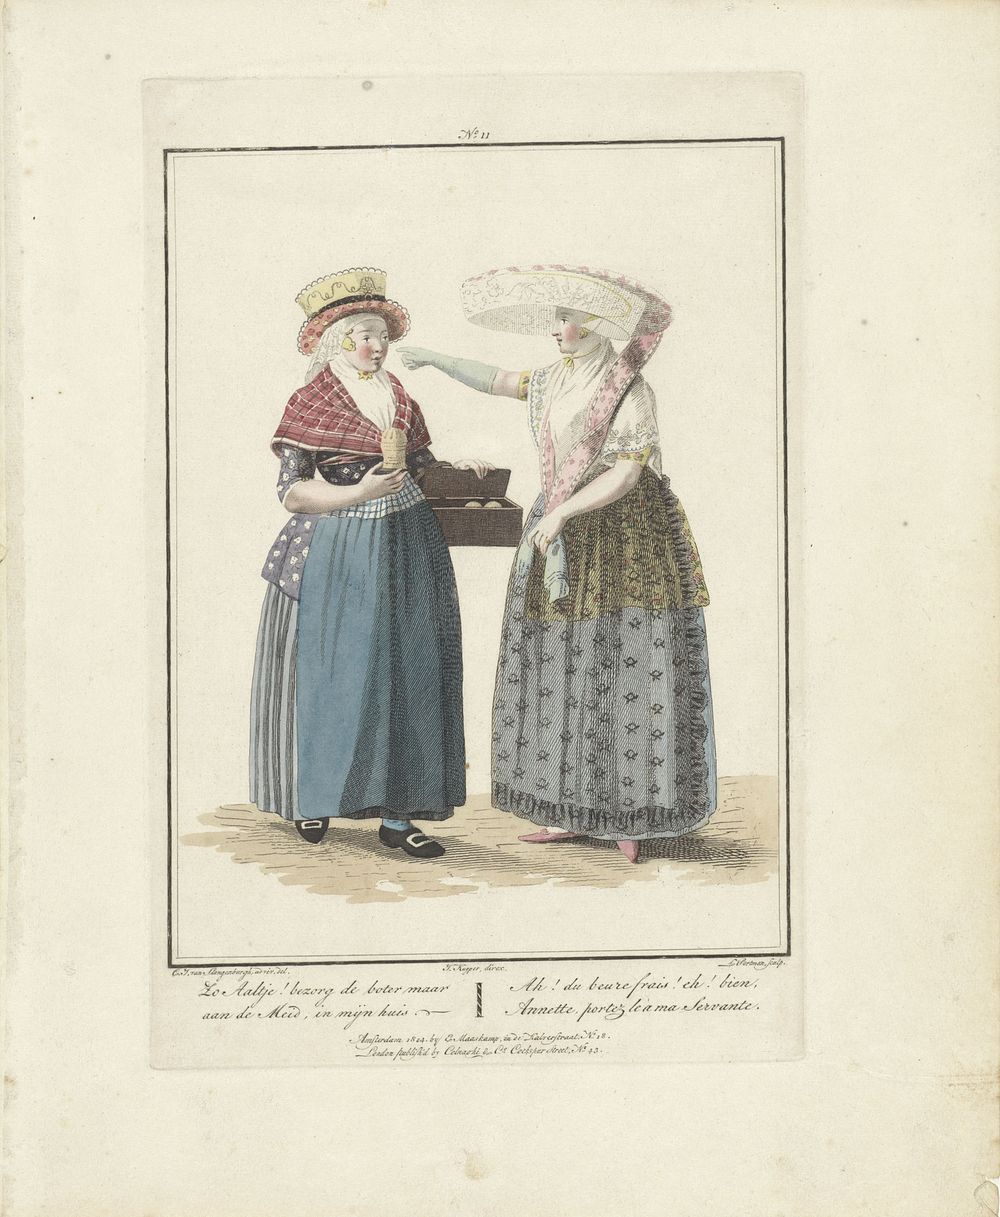 Boterverkoopster en klant in klederdracht (1803 - 1807) by Ludwig Gottlieb Portman, Jacques Kuyper, Carel Jacob van Baar van…